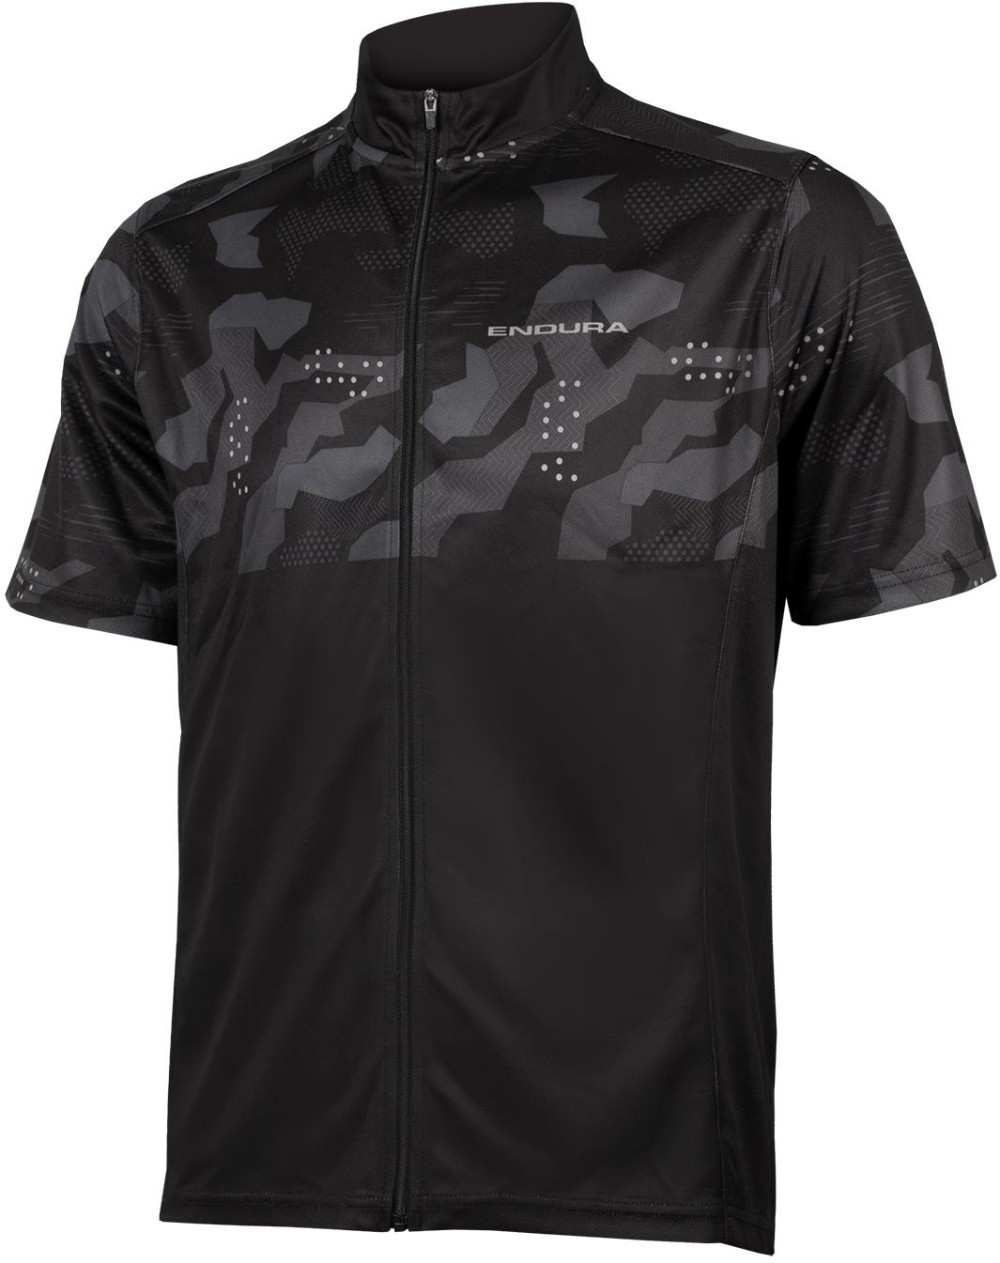 Hummvee Ray Short Sleeve Cycling Jersey image 0